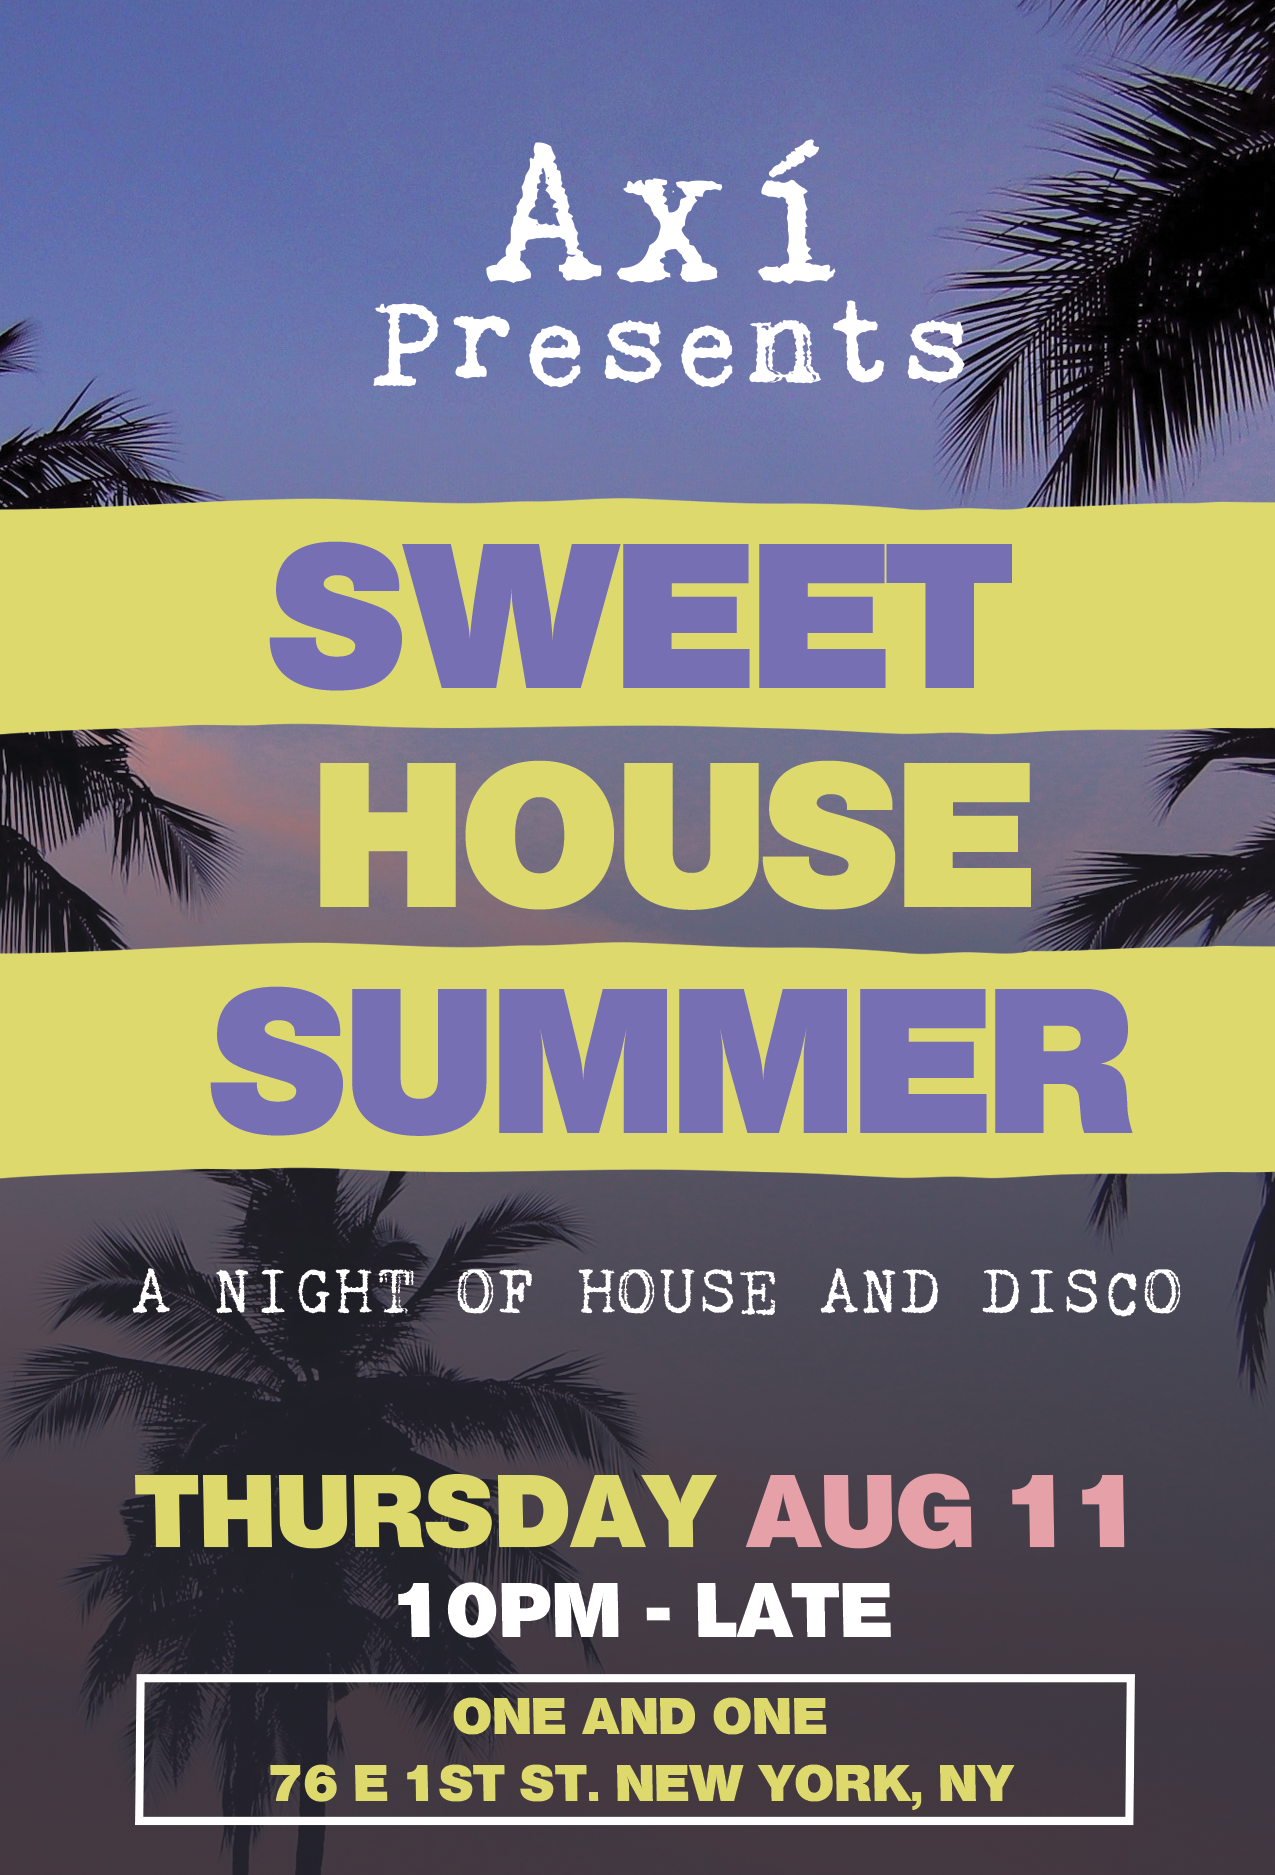 Sweet House Summer Vol 2 at Nexus Lounge, New York